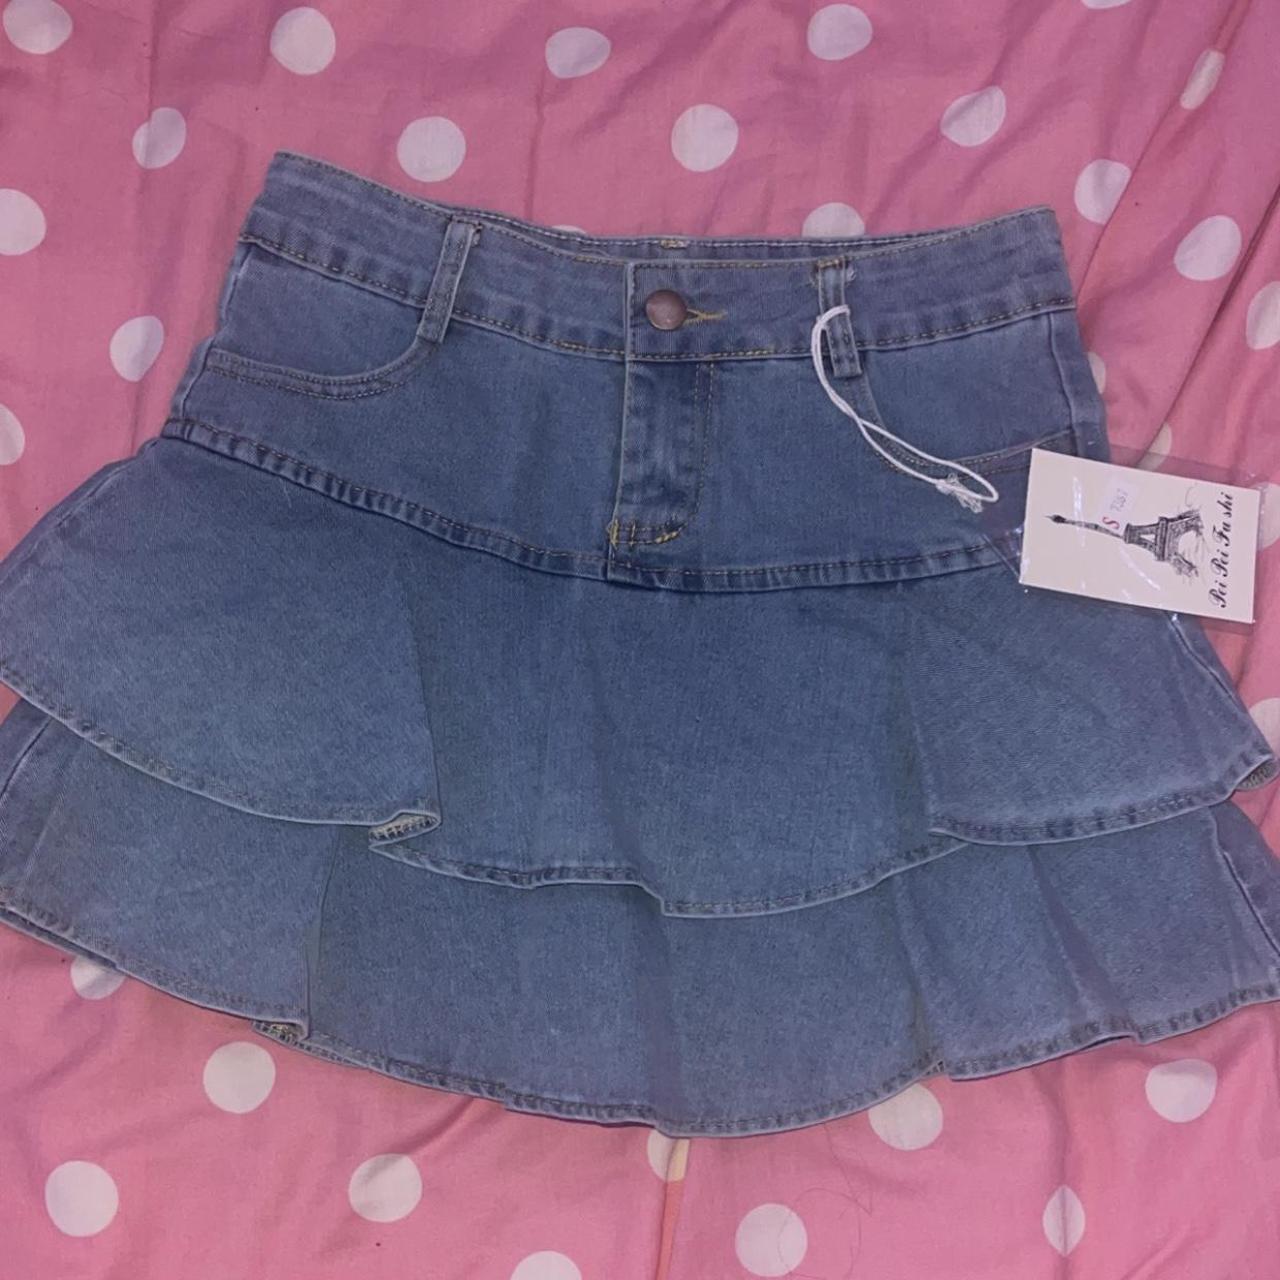 💗 the infamous cutecore jean skirt 💗 never been... - Depop